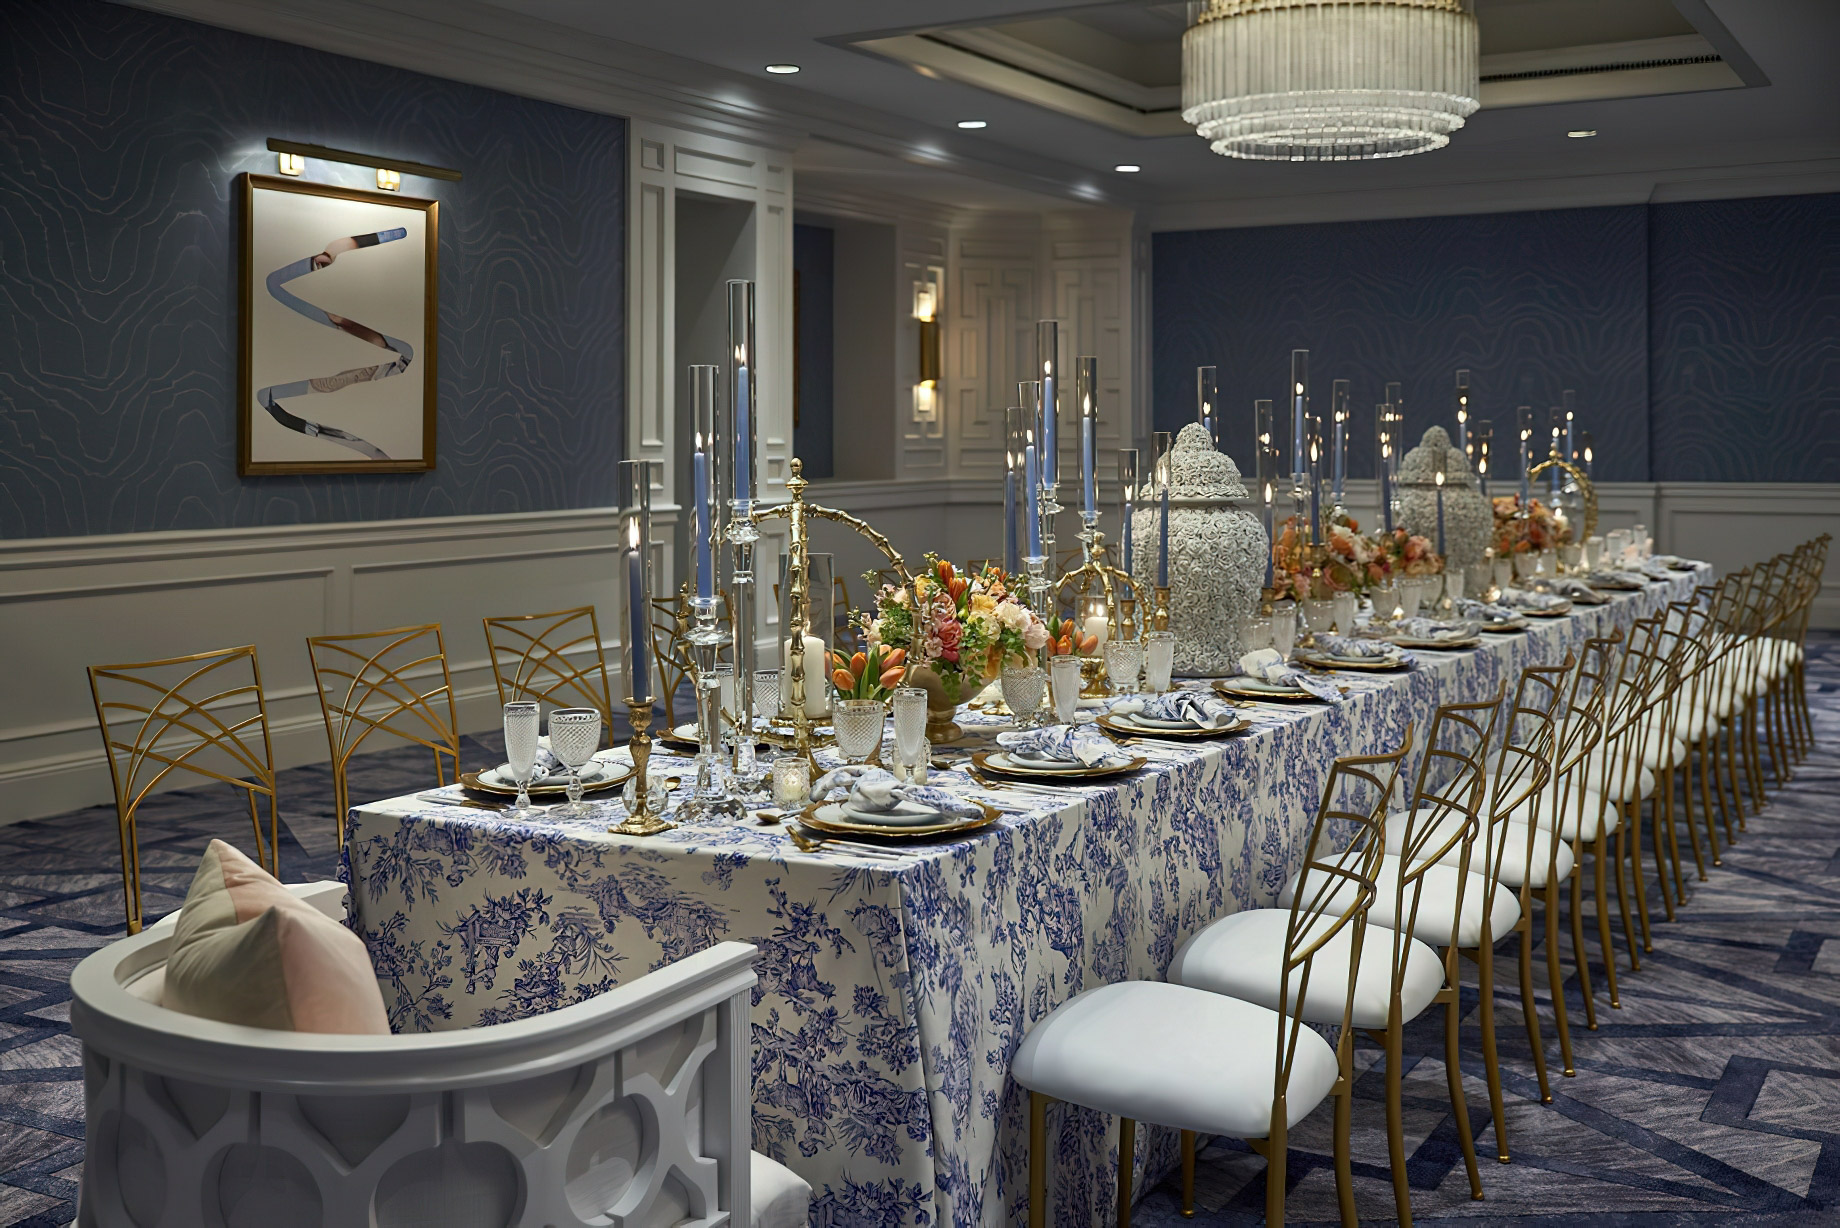 The Ritz-Carlton, Pentagon City Hotel - Arlington, VA, USA - Function Room Table Setting